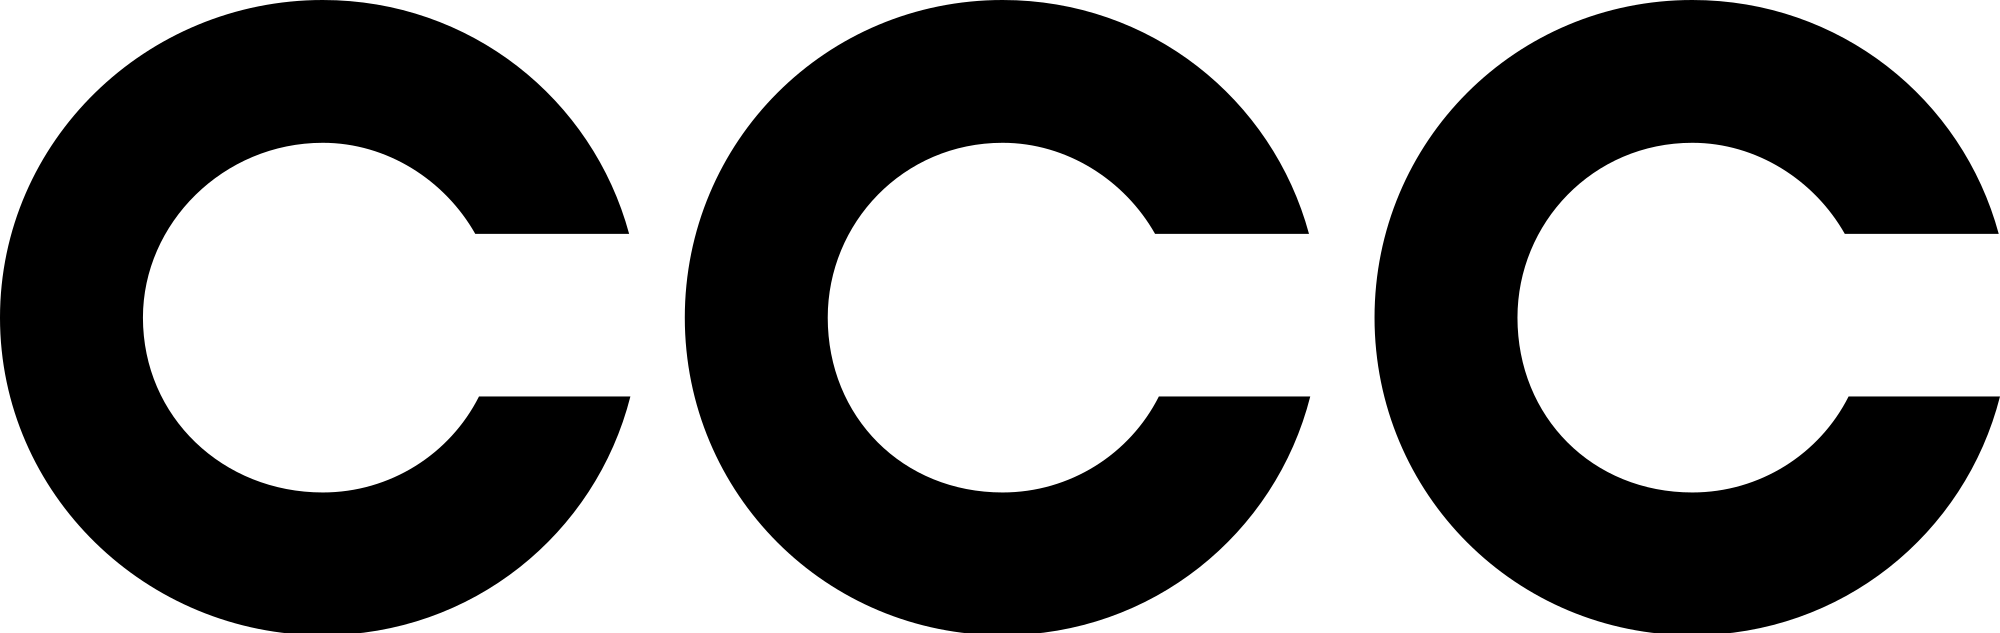 CCC Logo - Culture Convenience Club (CCC) logo.svg